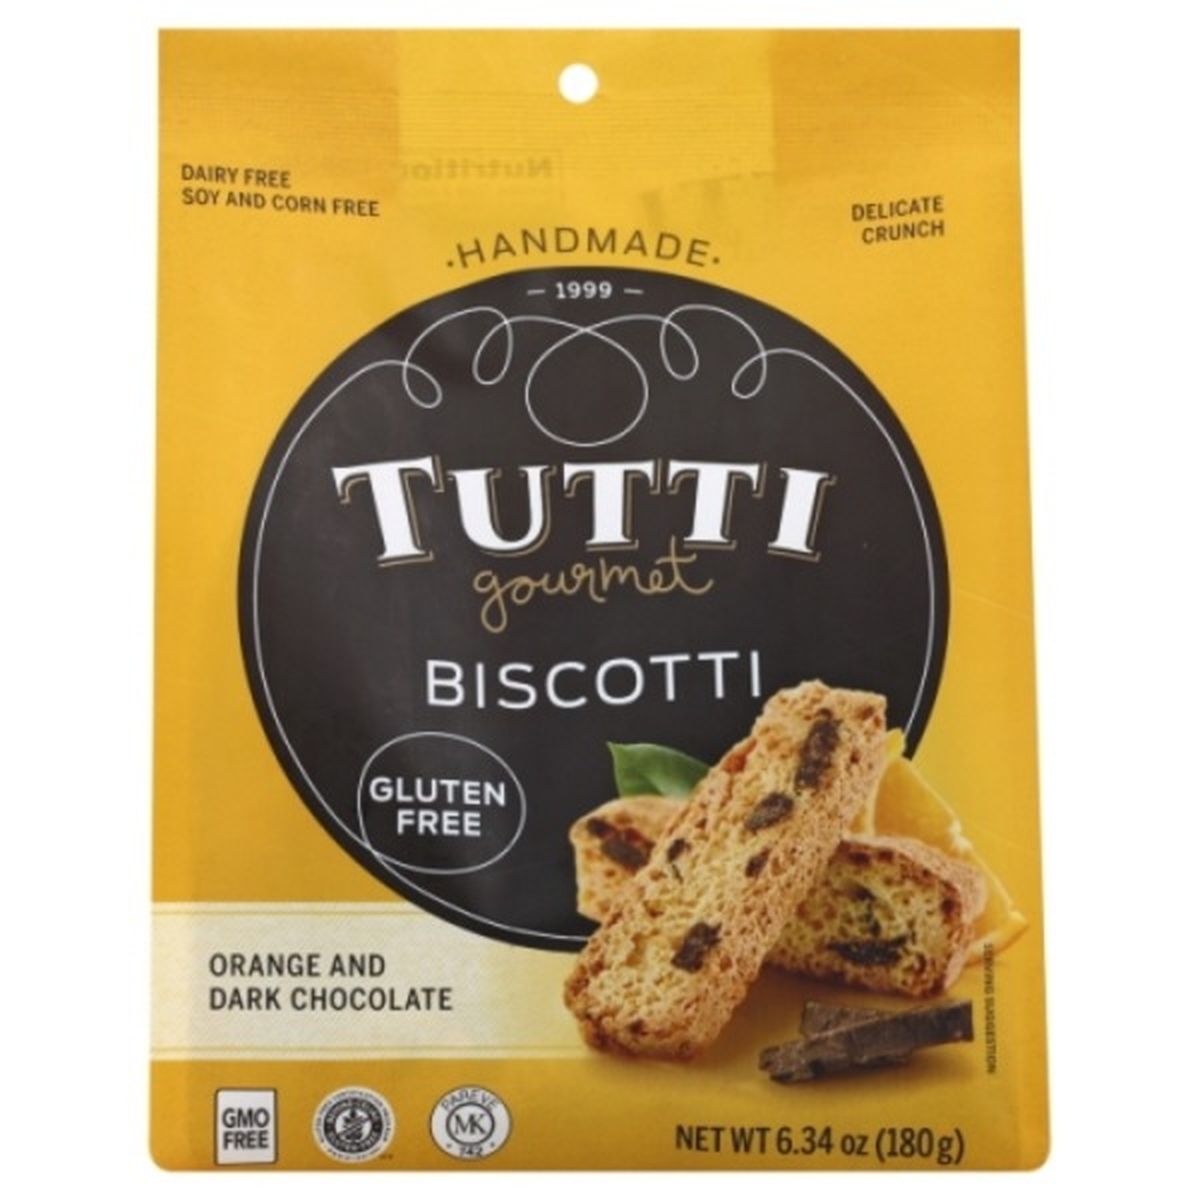 Calories in Tutti Gourmet Biscotti, Orange and Dark Chocolate